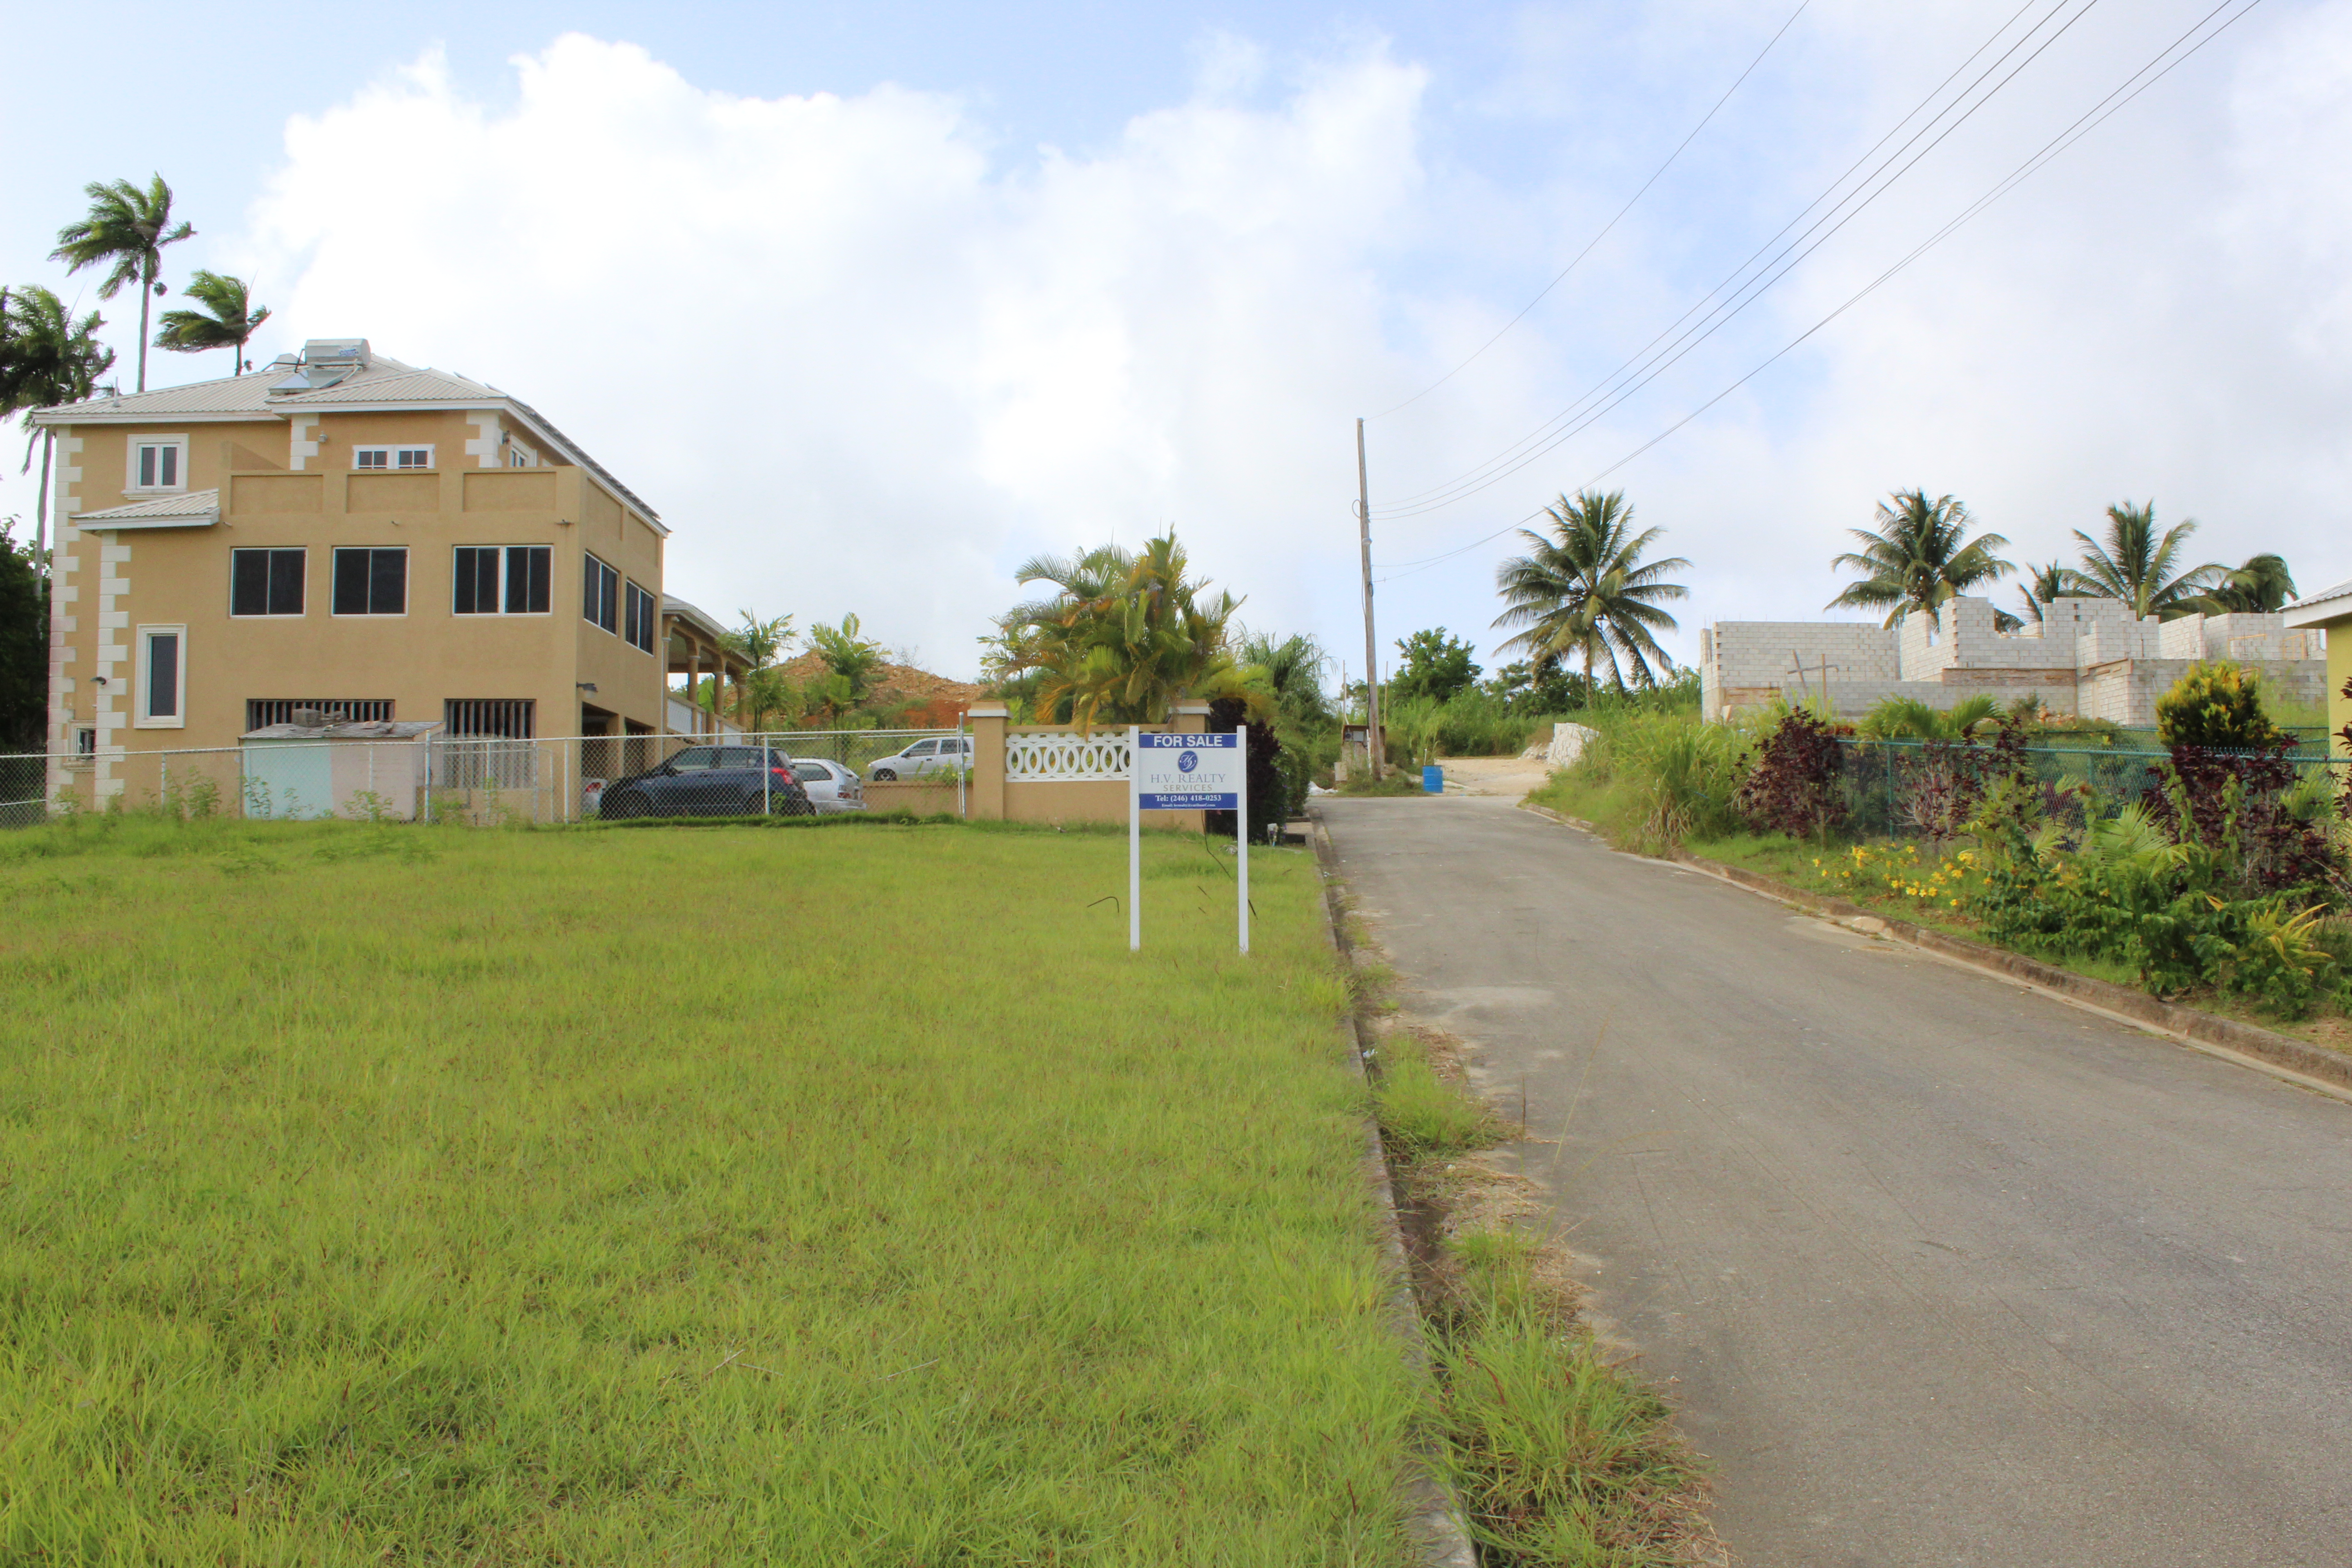 Mount Wilton Heights, Lot 15, 2nd Avenue, St. Thomas, Barbados